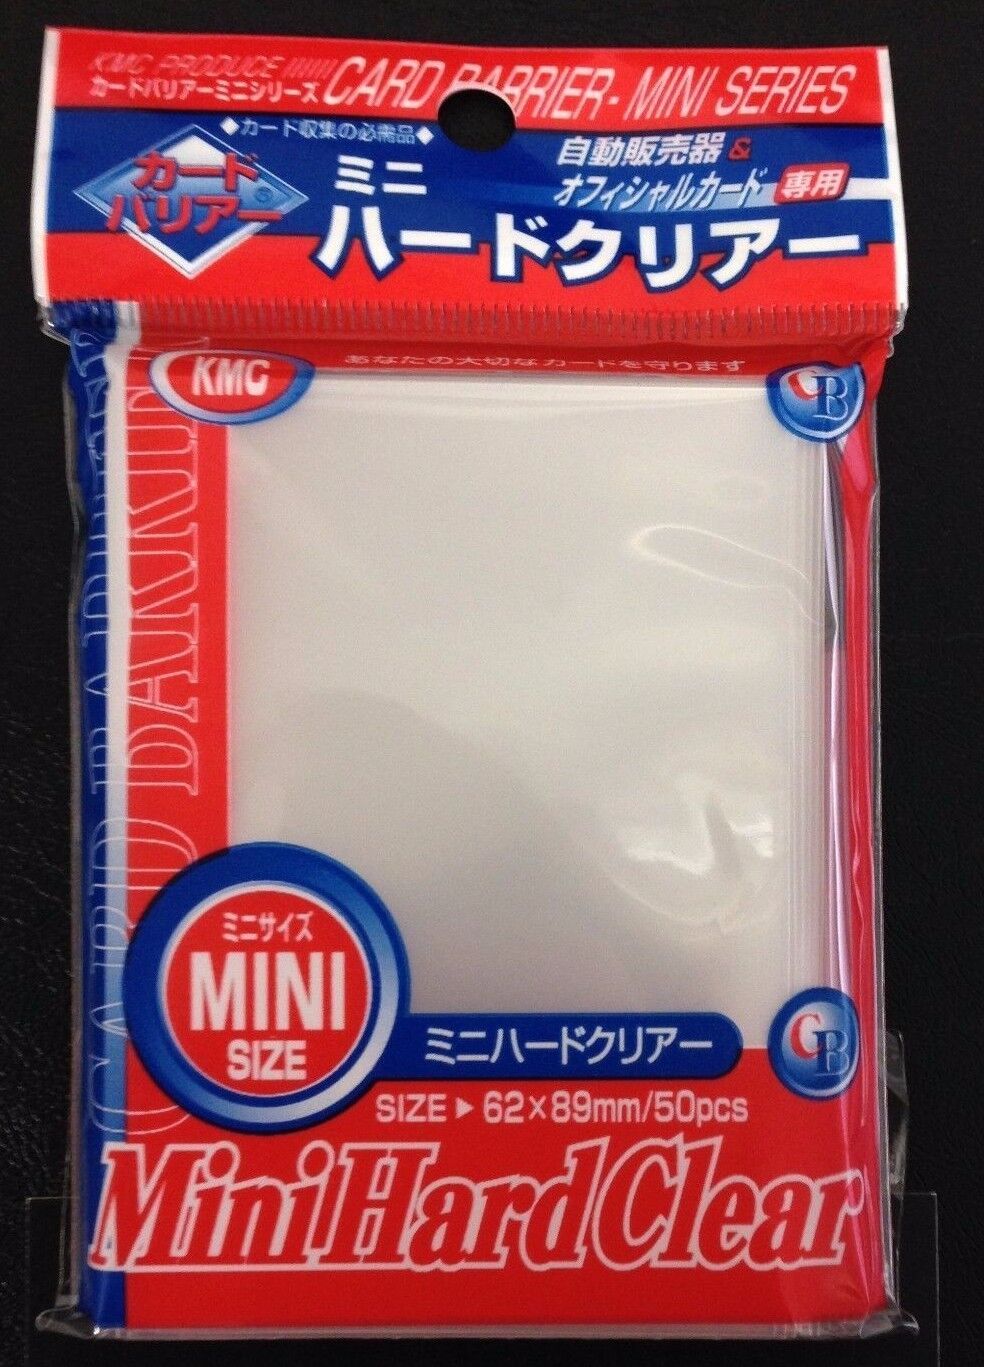 KMC MINI HARD CLEAR - Mini Yu-Gi-Oh 35% Max 88% OFF OFF Cardfight Size Vangua